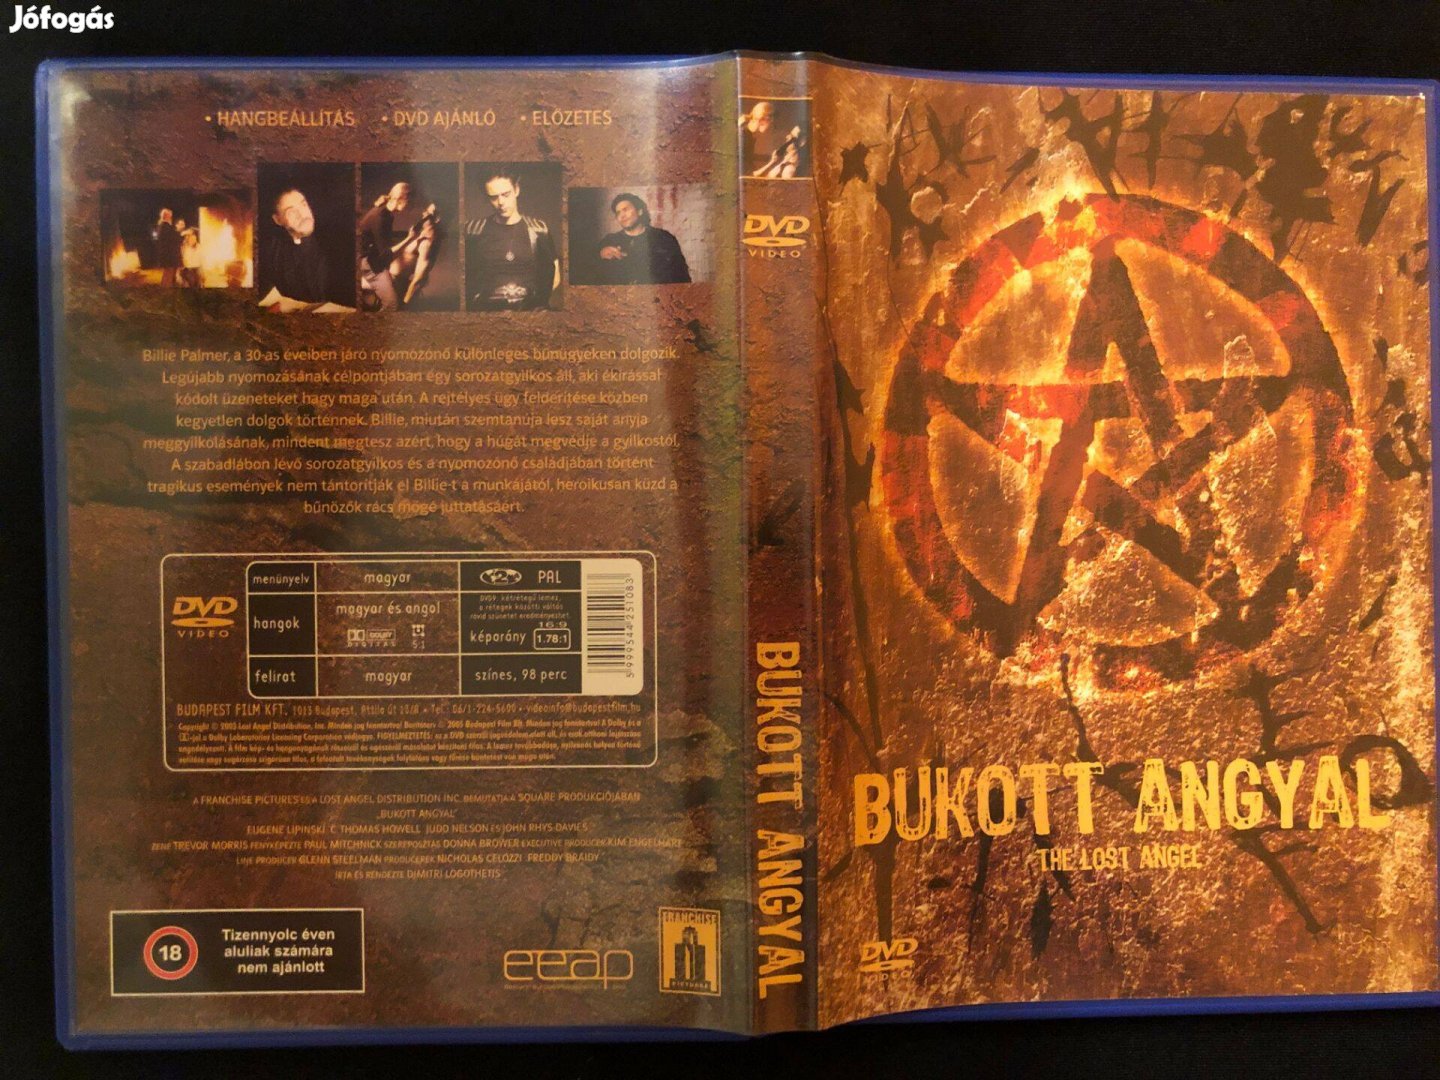 Bukott angyal The Lost Angel (John Rhys-Davies, Alison Eastwood) DVD